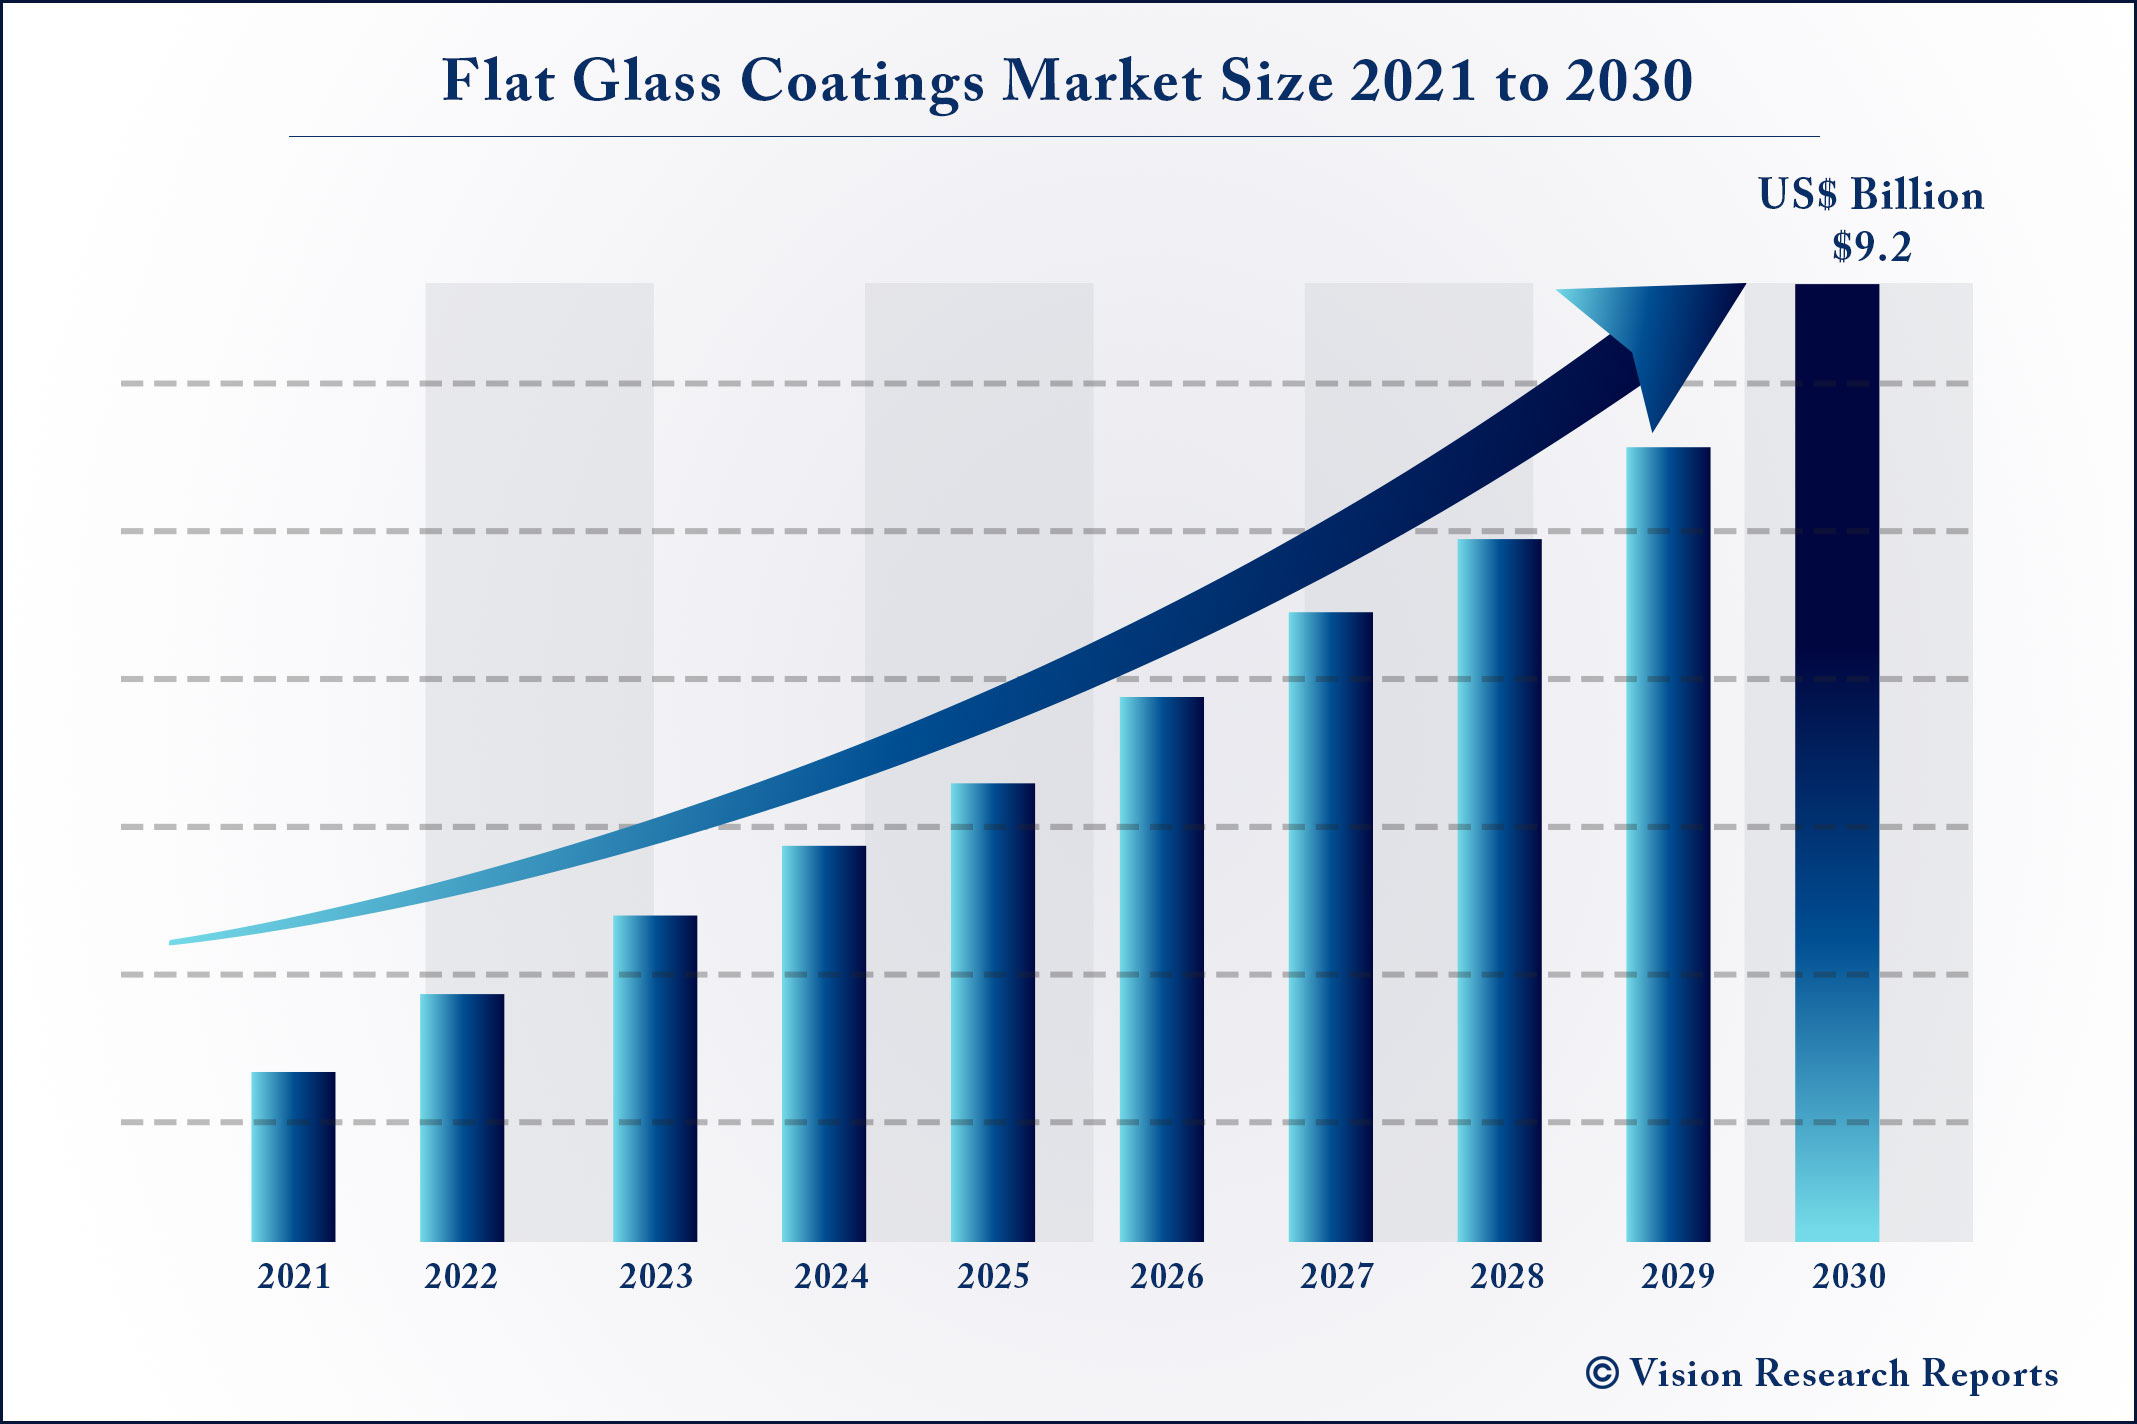 Flat Glass Coatings Market Size 2021 to 2030